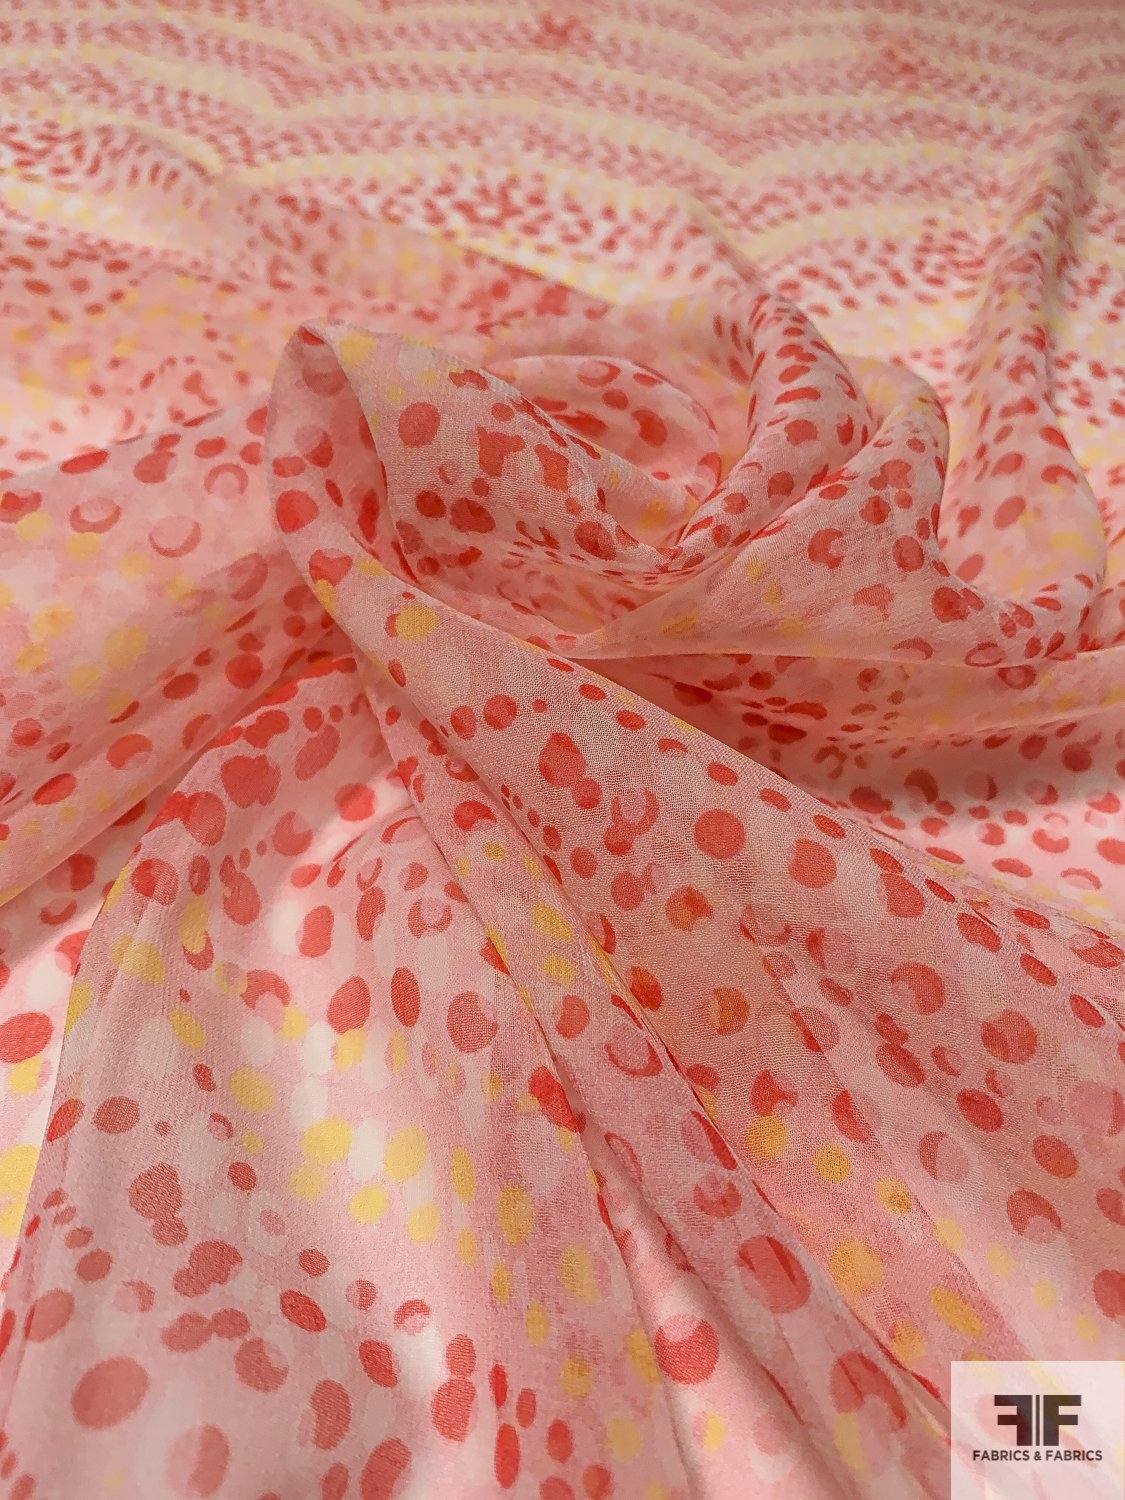 Curvy Dotted Chevron Printed Silk Chiffon - Berry-Coral / Light Pink / Yellow / White